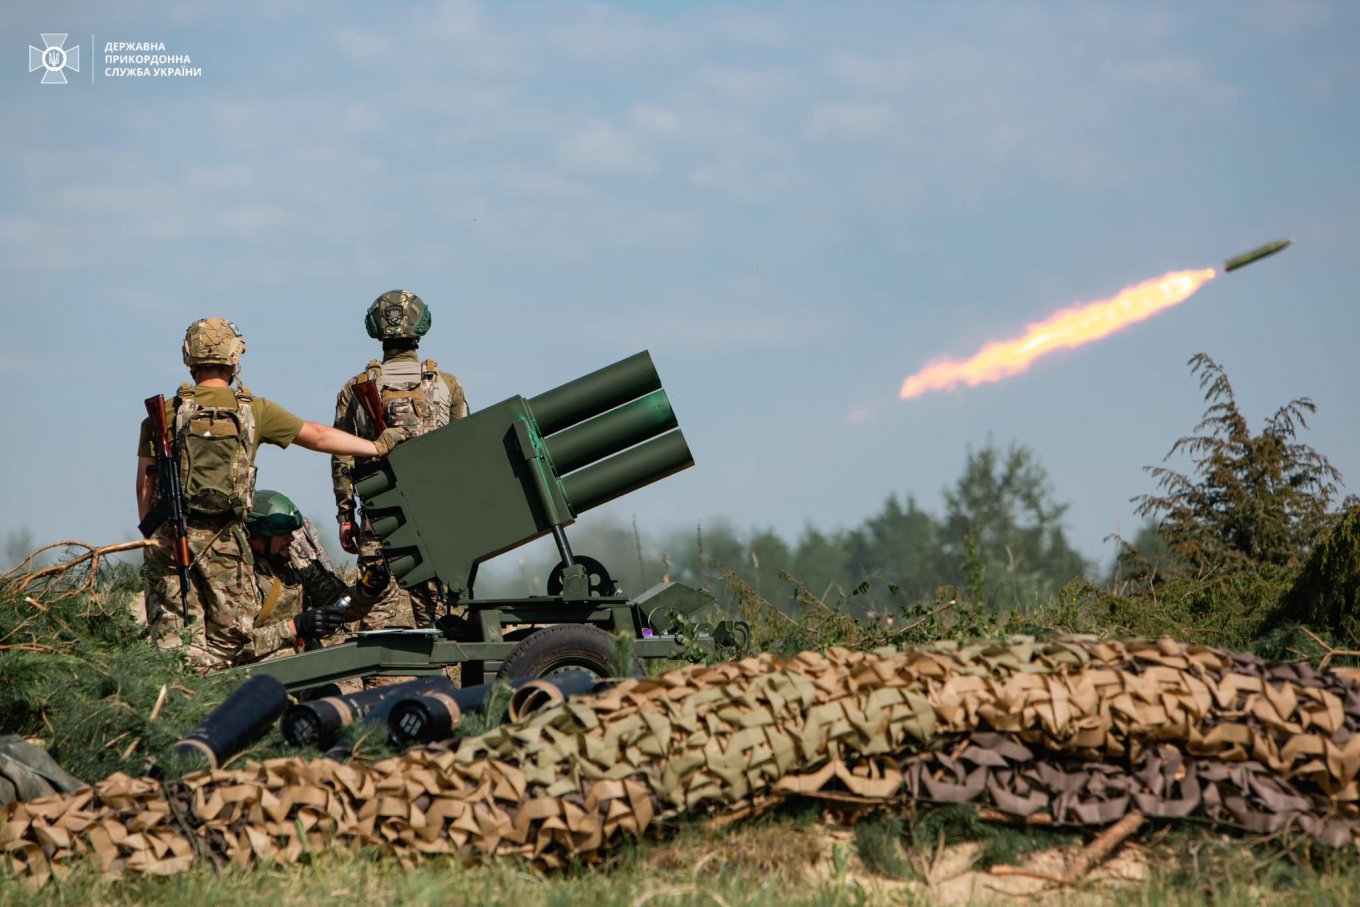 Firing from the RAK-SA-12 MLRS, Ukrainian Border Guards Showed How Their Mini-MLRSs Will Eliminate russian Infantry, Defense Express